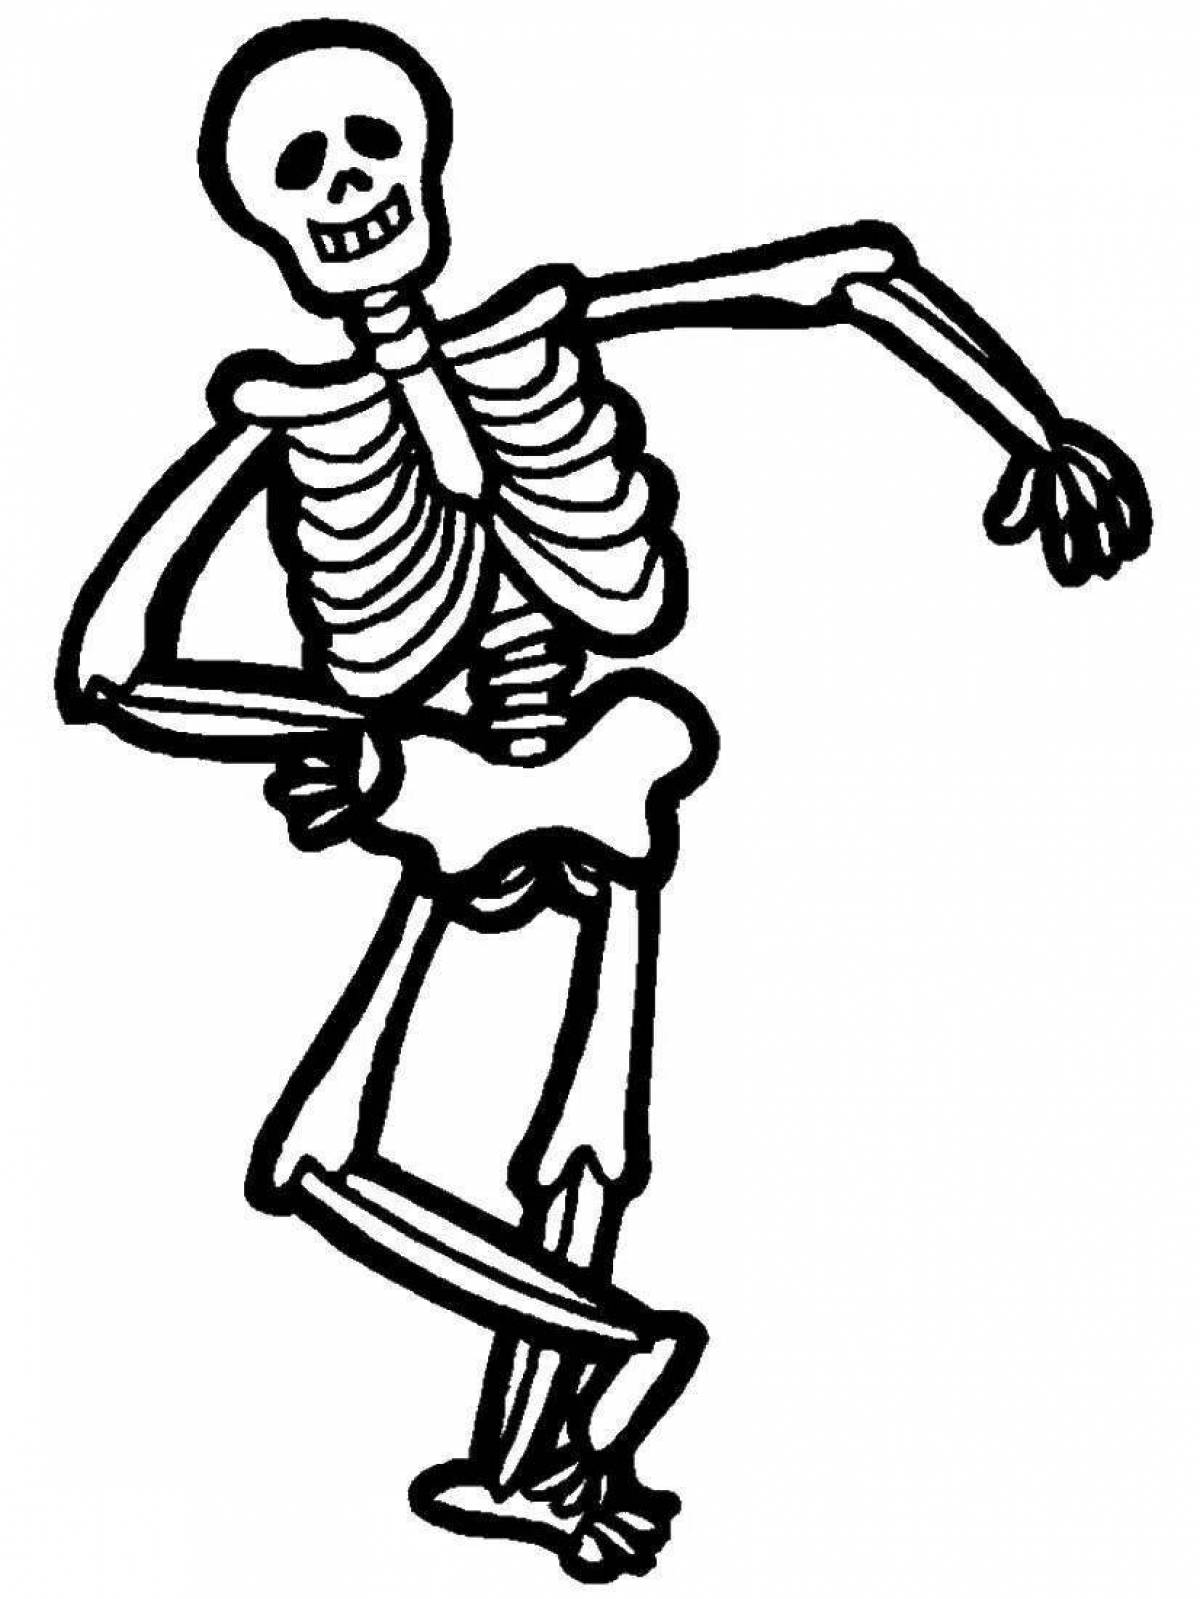 Creative skeleton coloring for kids